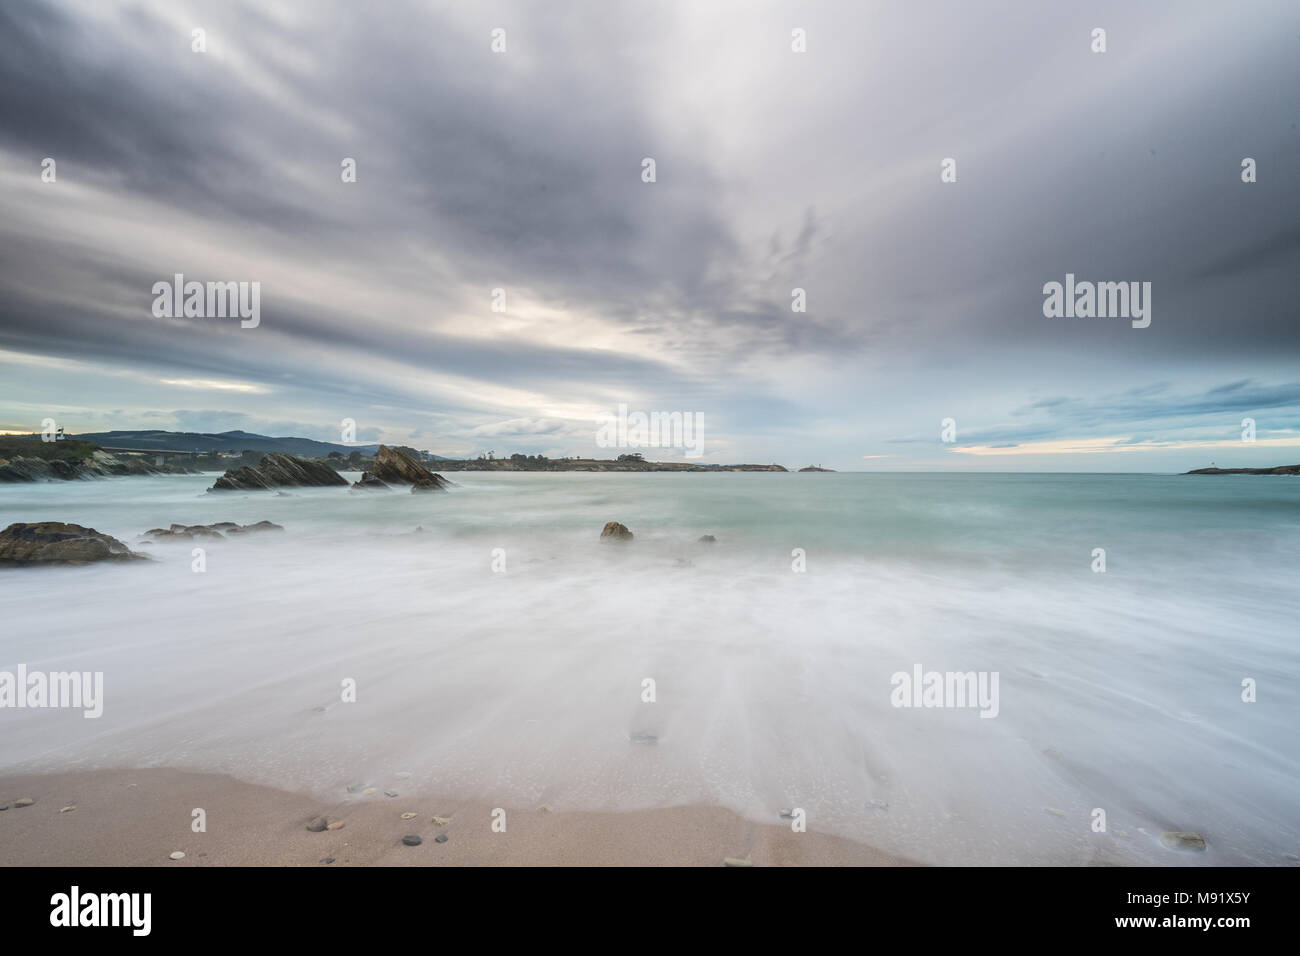 Tarde de nubes en la playa de Arnao Foto de stock